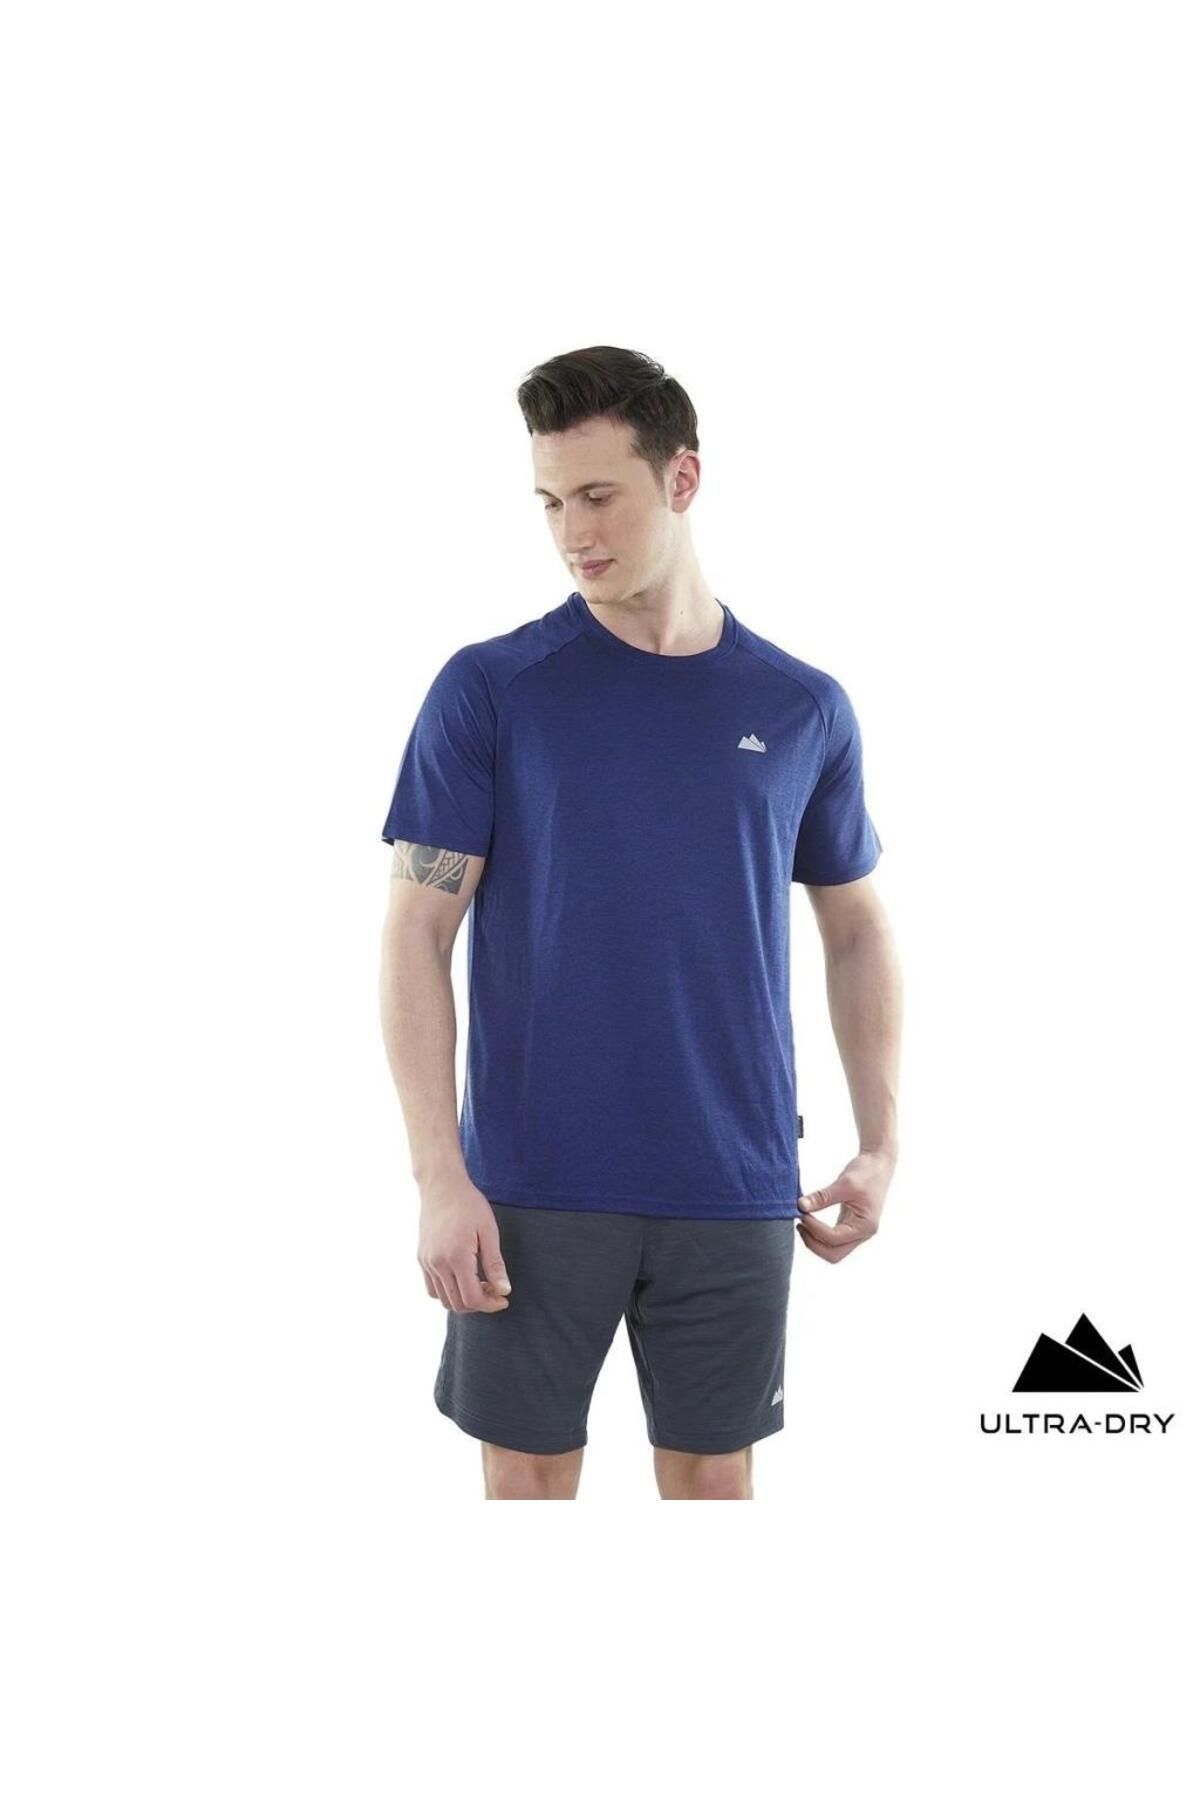 Alpinist Mission Ultra Dry Erkek T-shirt Lacivert